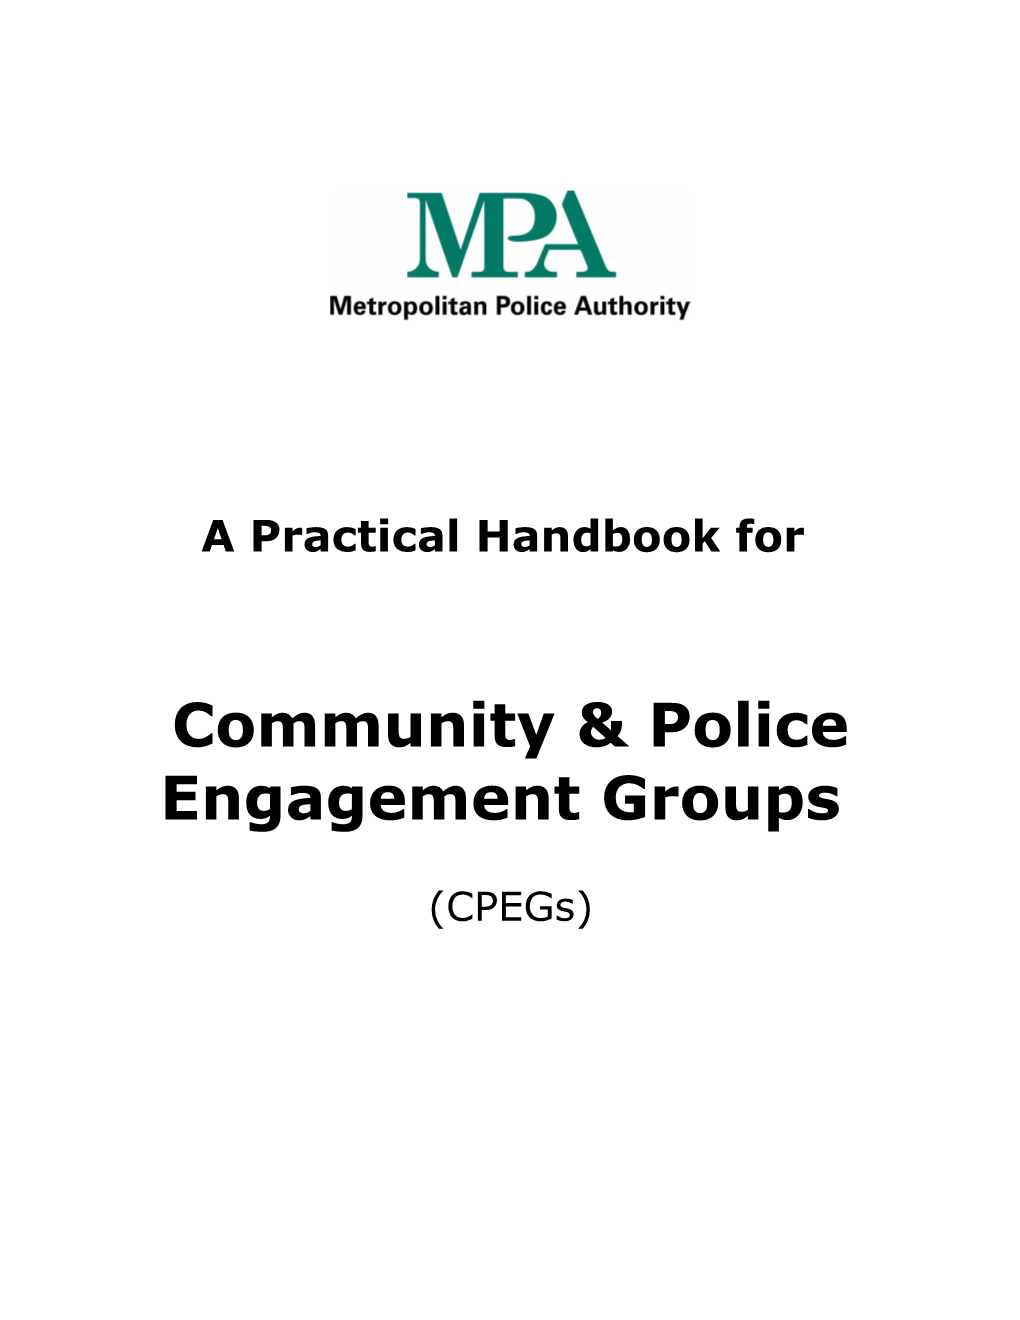 Community & Police Engagement Groups